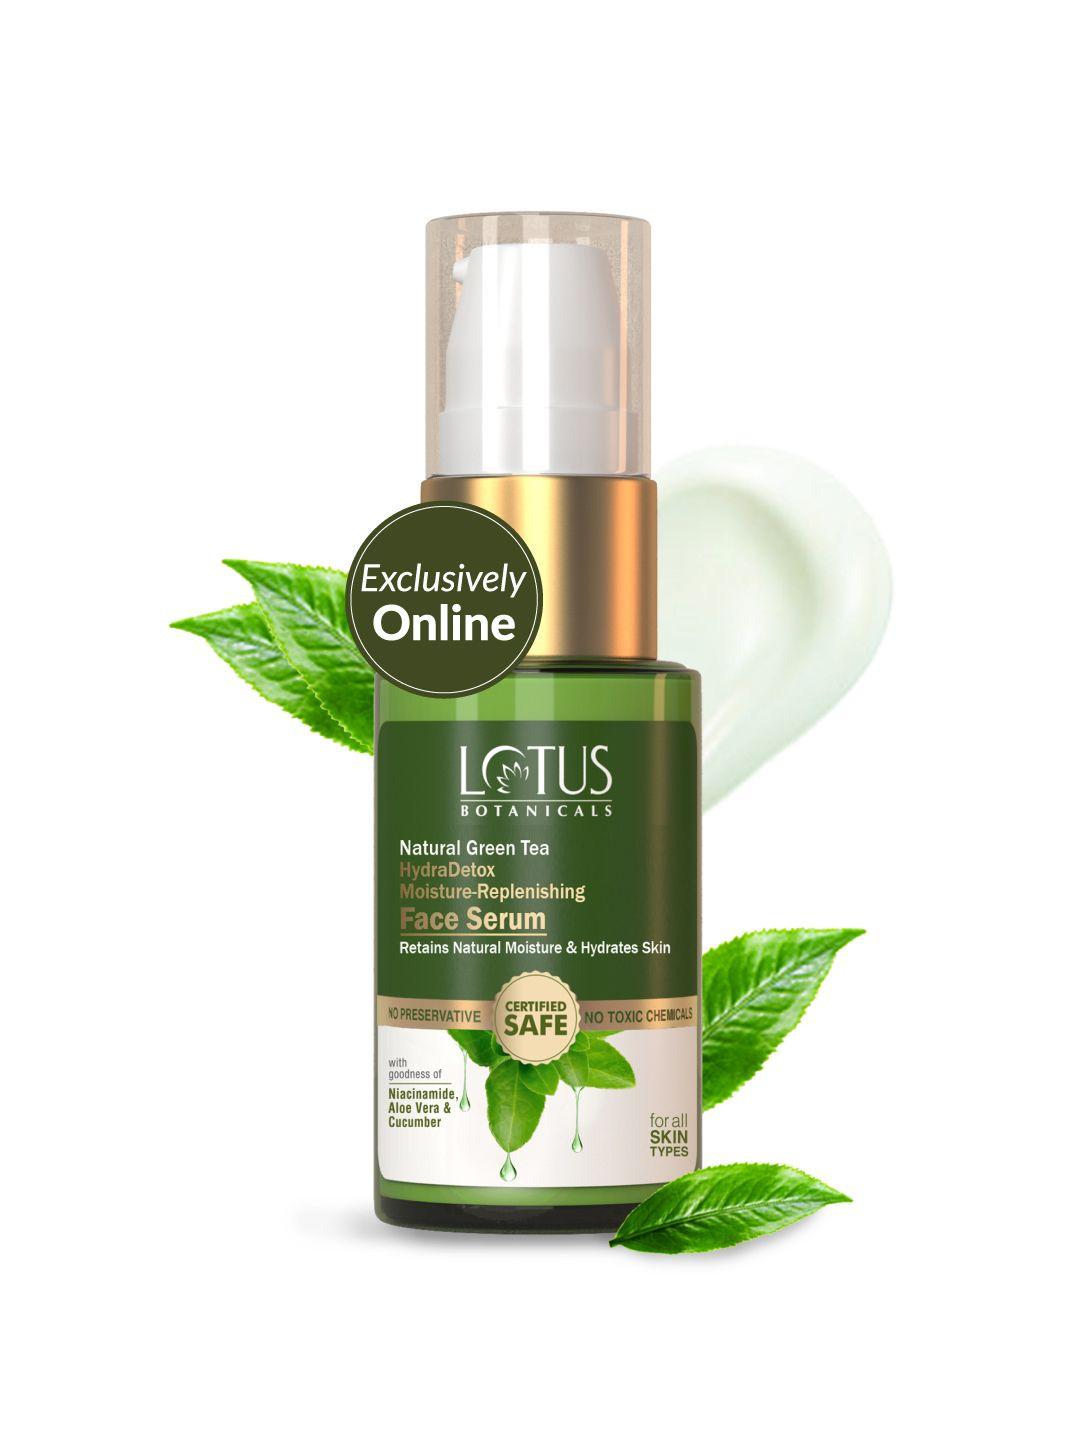 lotus botanicals natural green tea hydradetox moisture-replenishing face serum - 30 g